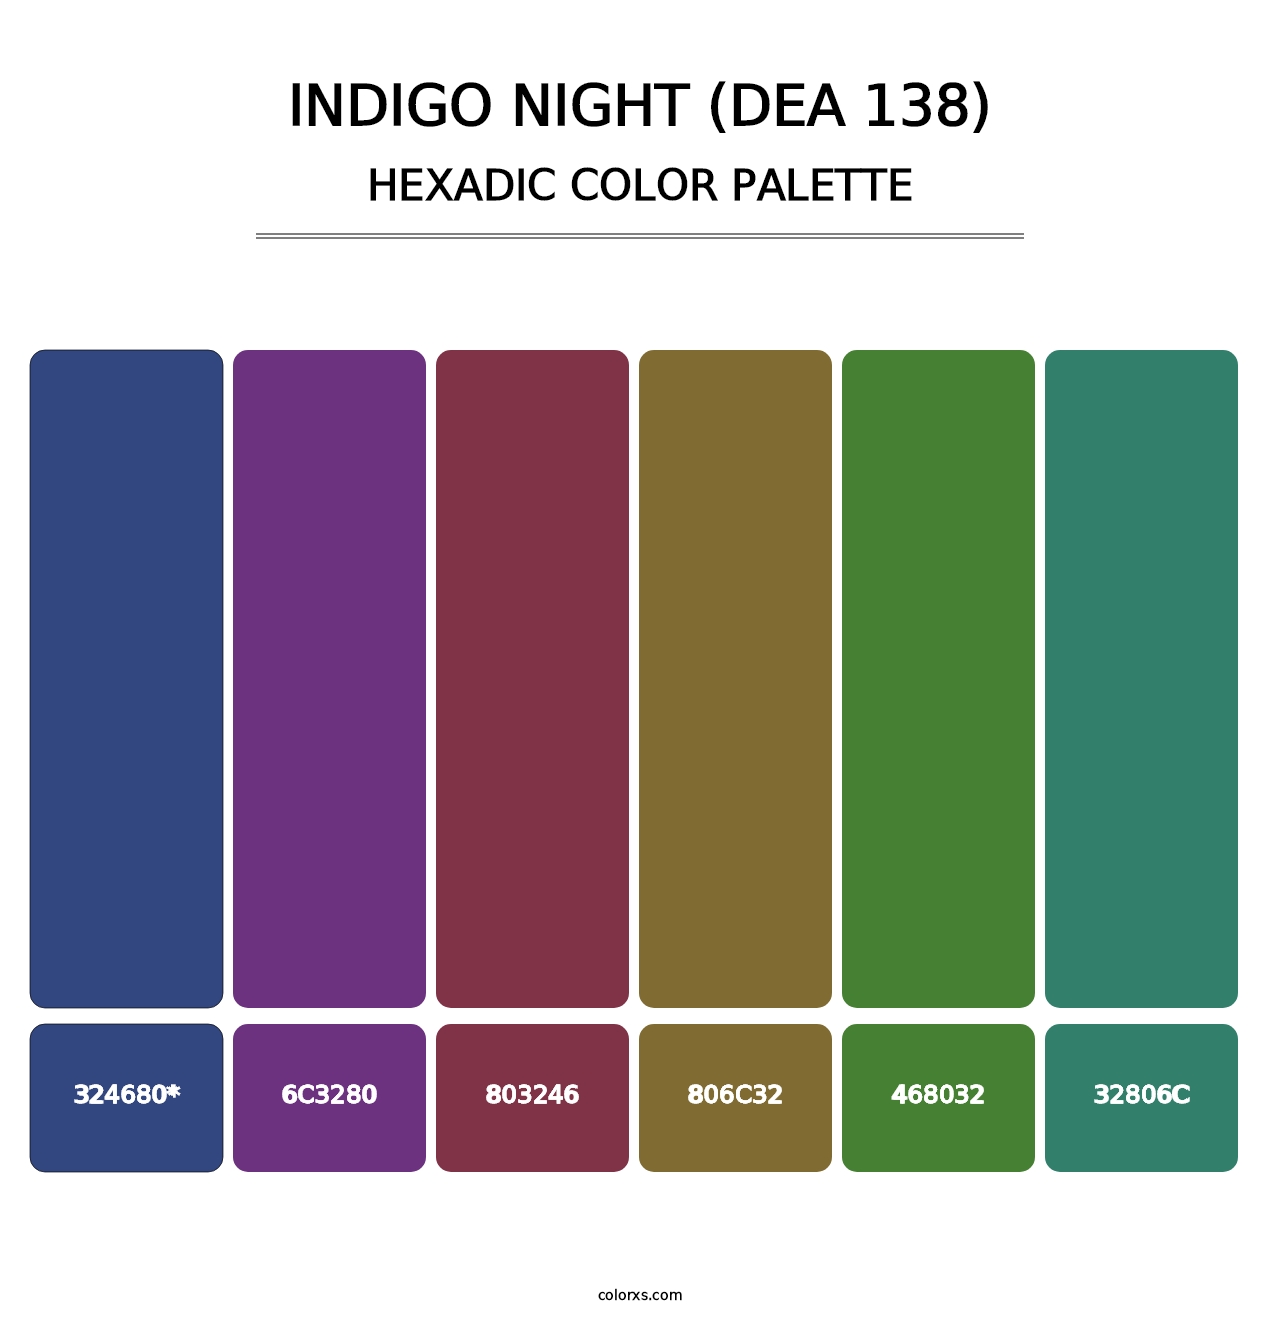 Indigo Night (DEA 138) - Hexadic Color Palette